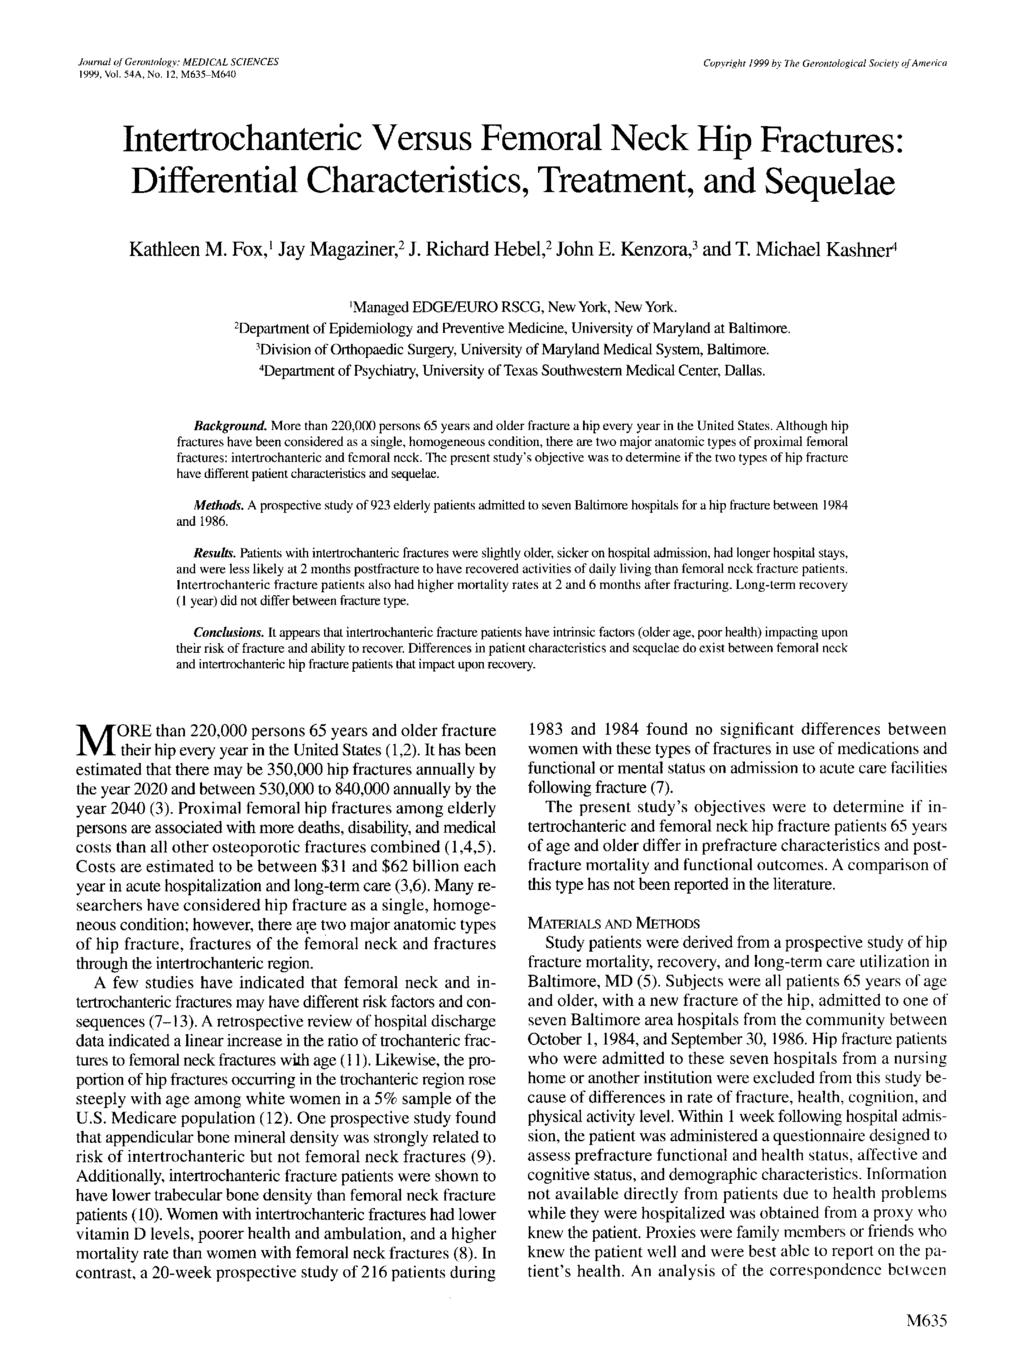 Journal ofgerontology: MEDICAL SCIENCES 1999, Vol. 54A, No.